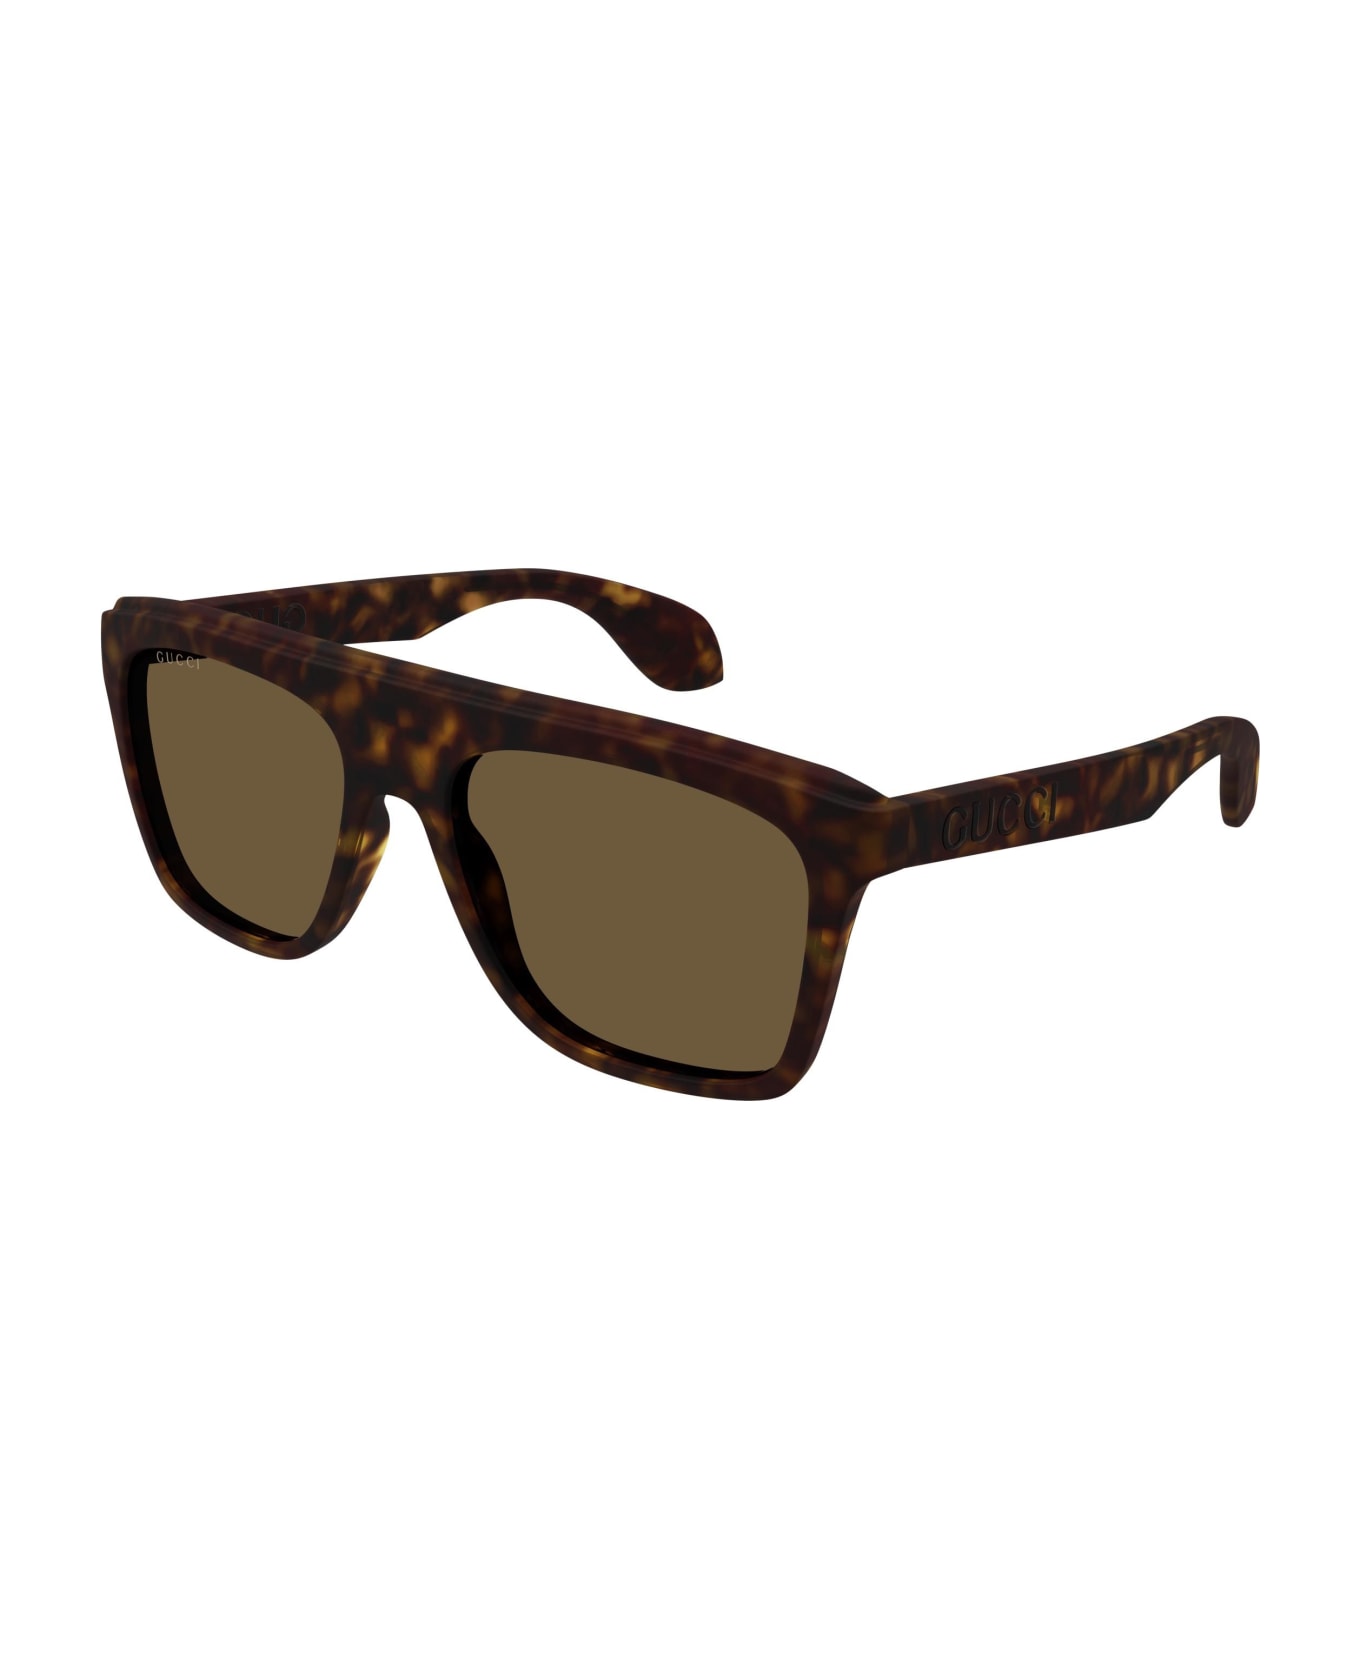 Gucci Eyewear Sunglasses - Havana/Marrone サングラス